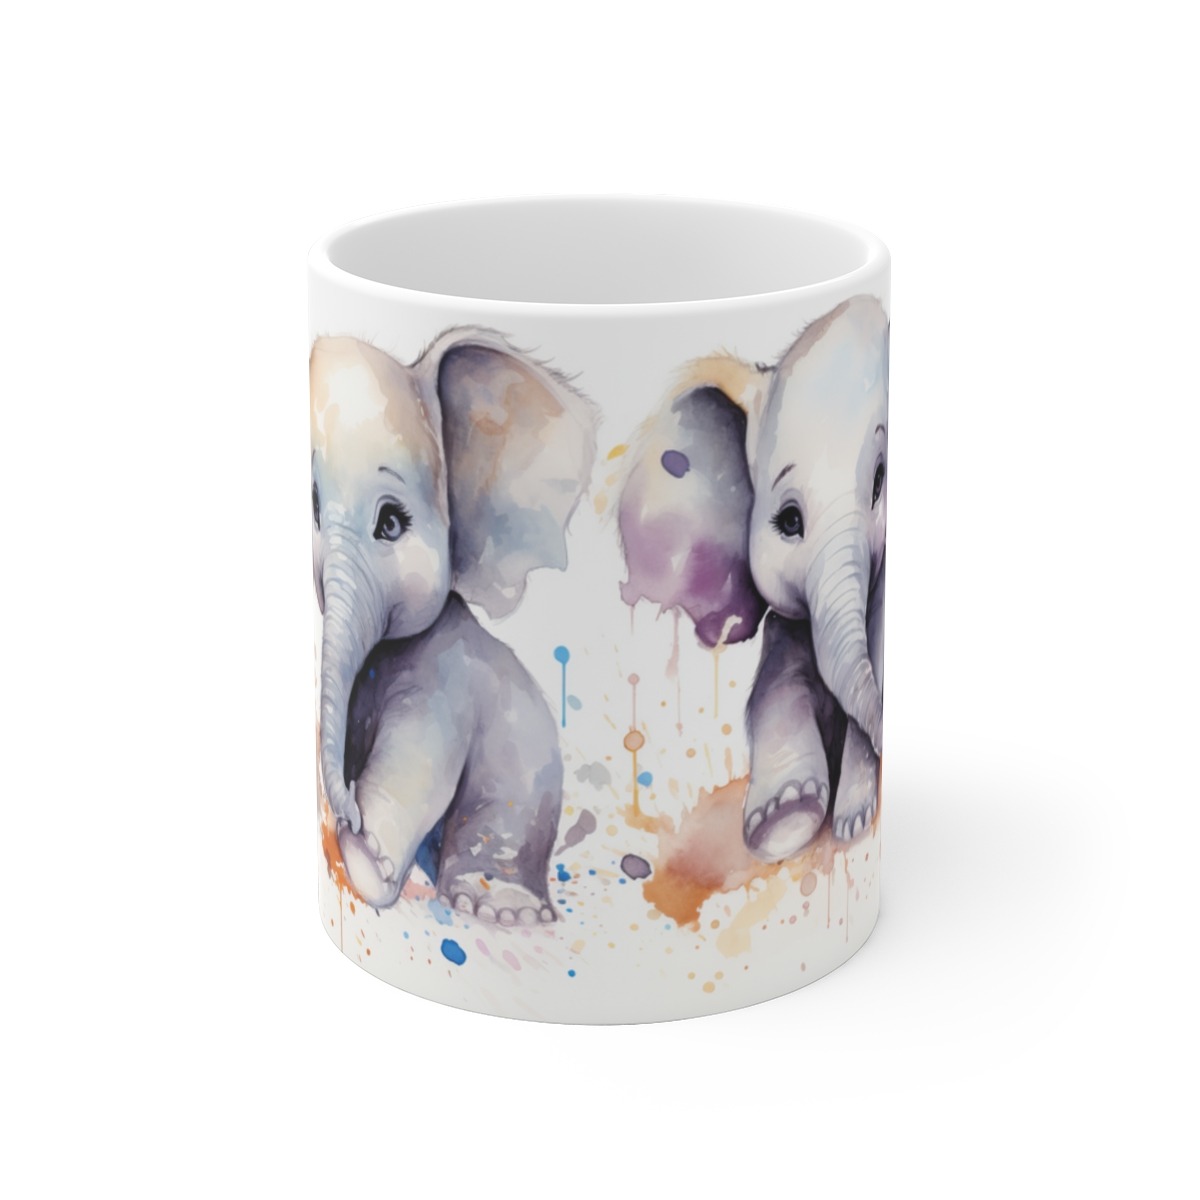 Weißes Keramikgeschirr - Elefantenkinder im Aquarellstil